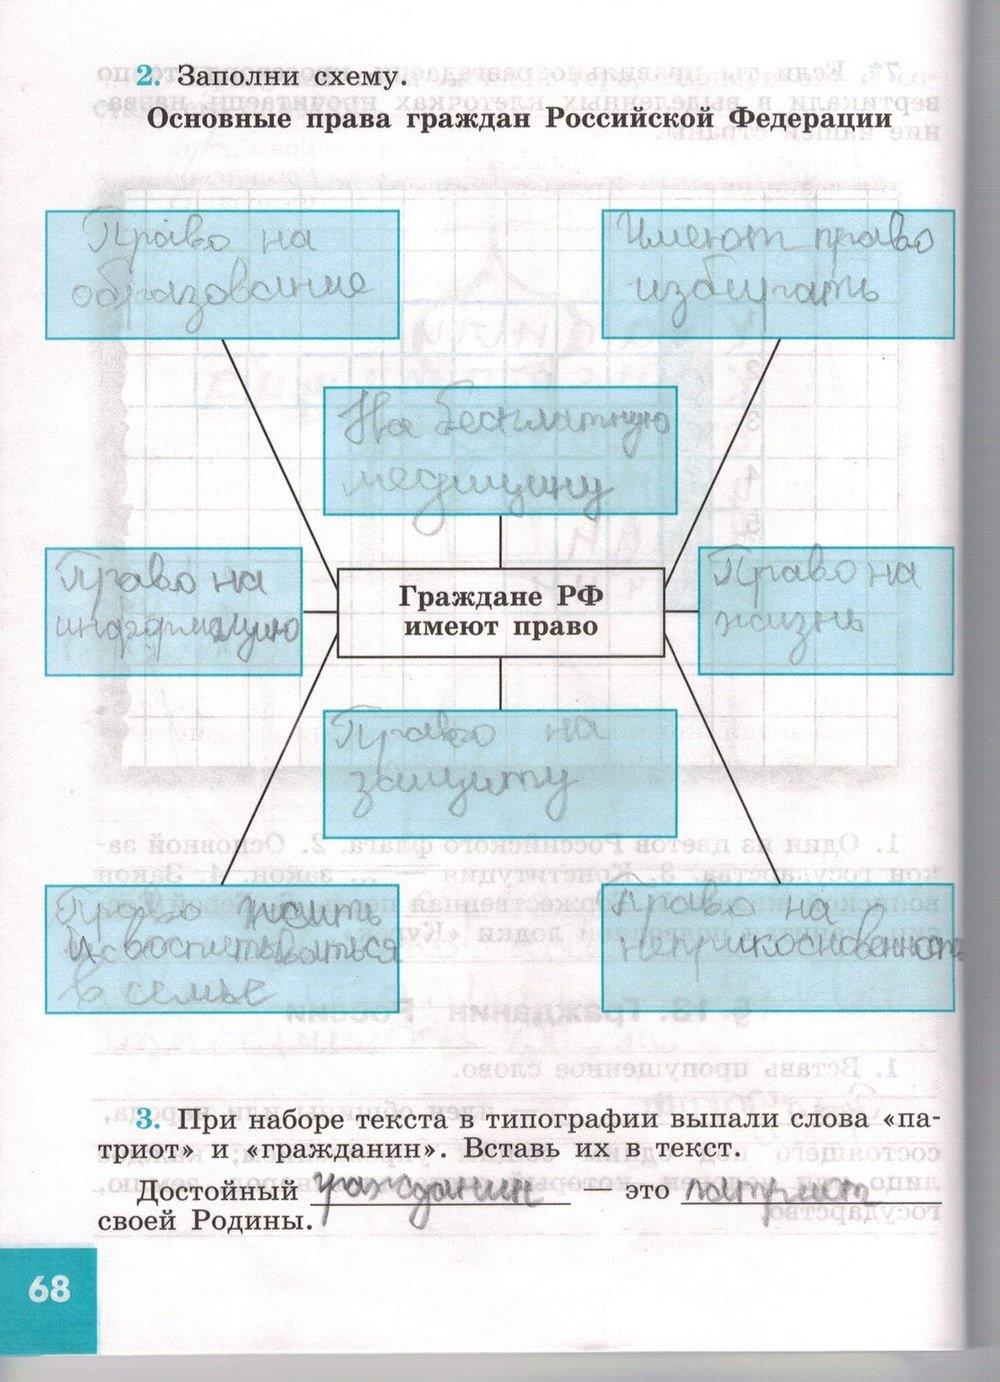 гдз 5 класс рабочая тетрадь страница 68 обществознание Иванова, Хотеенкова